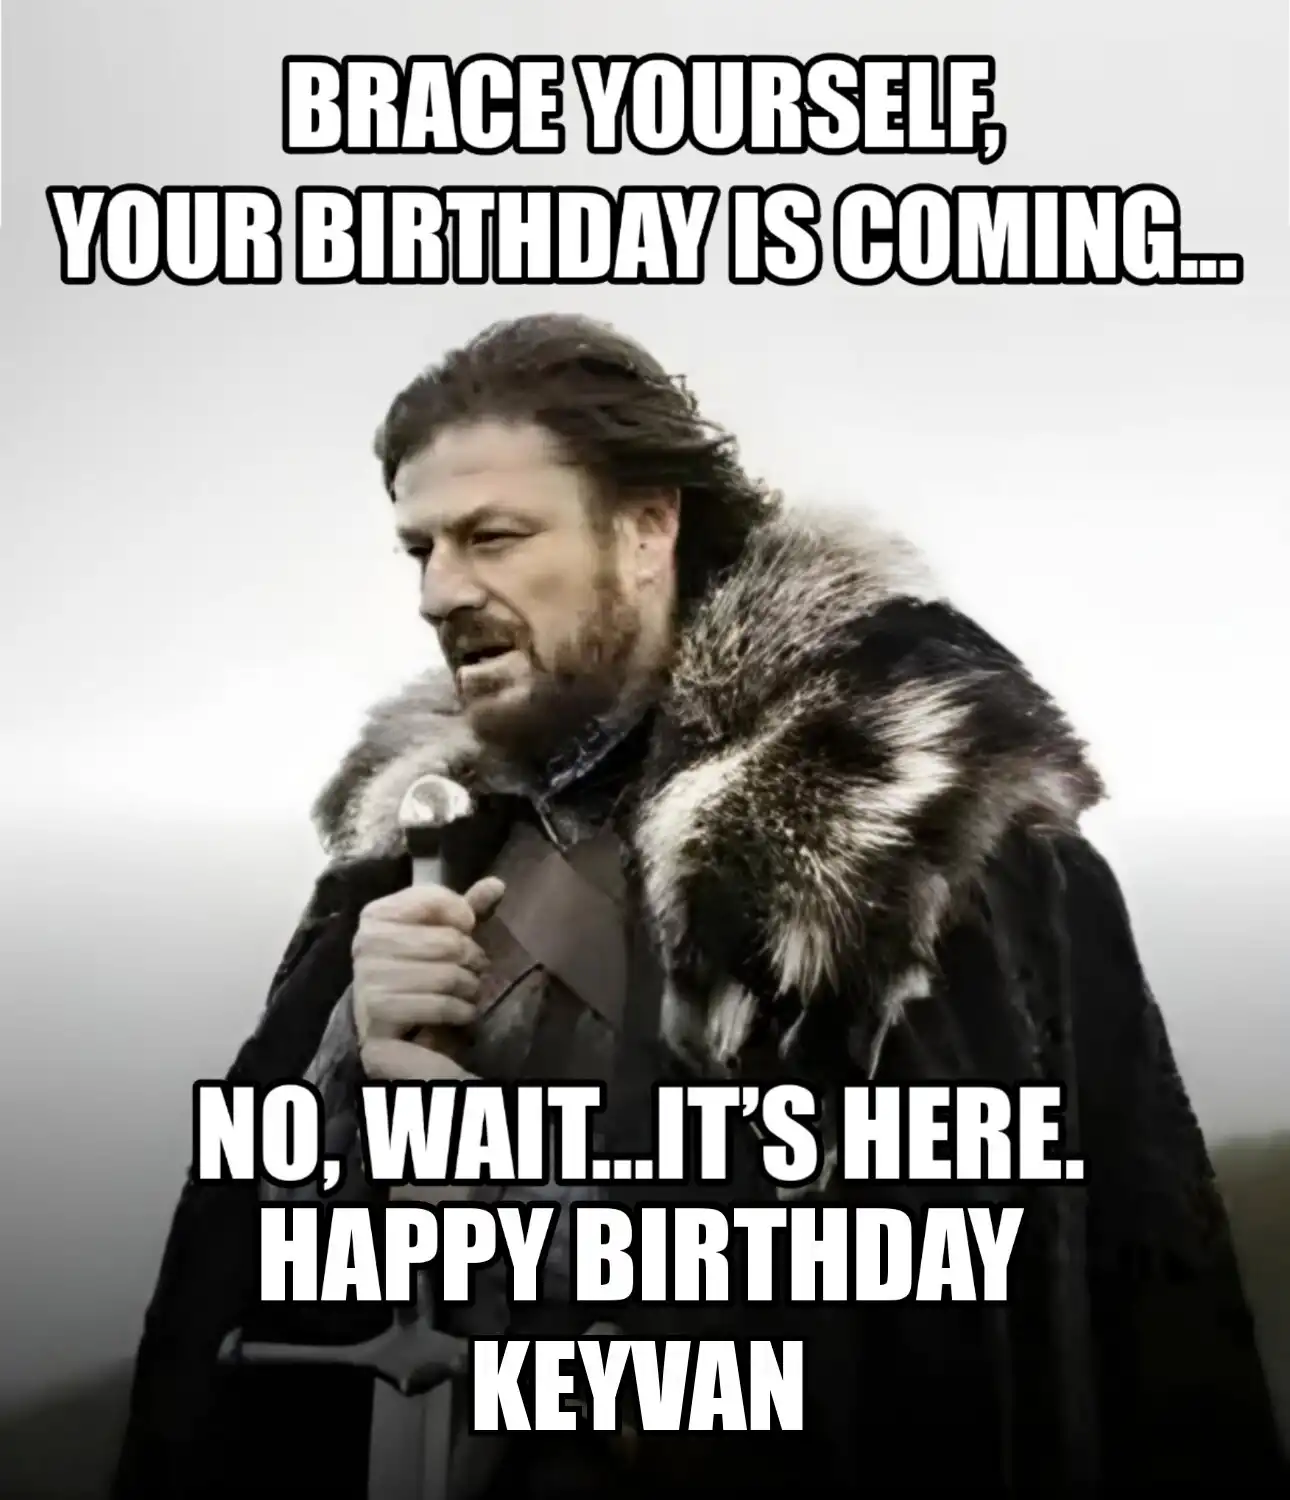 Happy Birthday Keyvan Brace Yourself Your Birthday Is Coming Meme